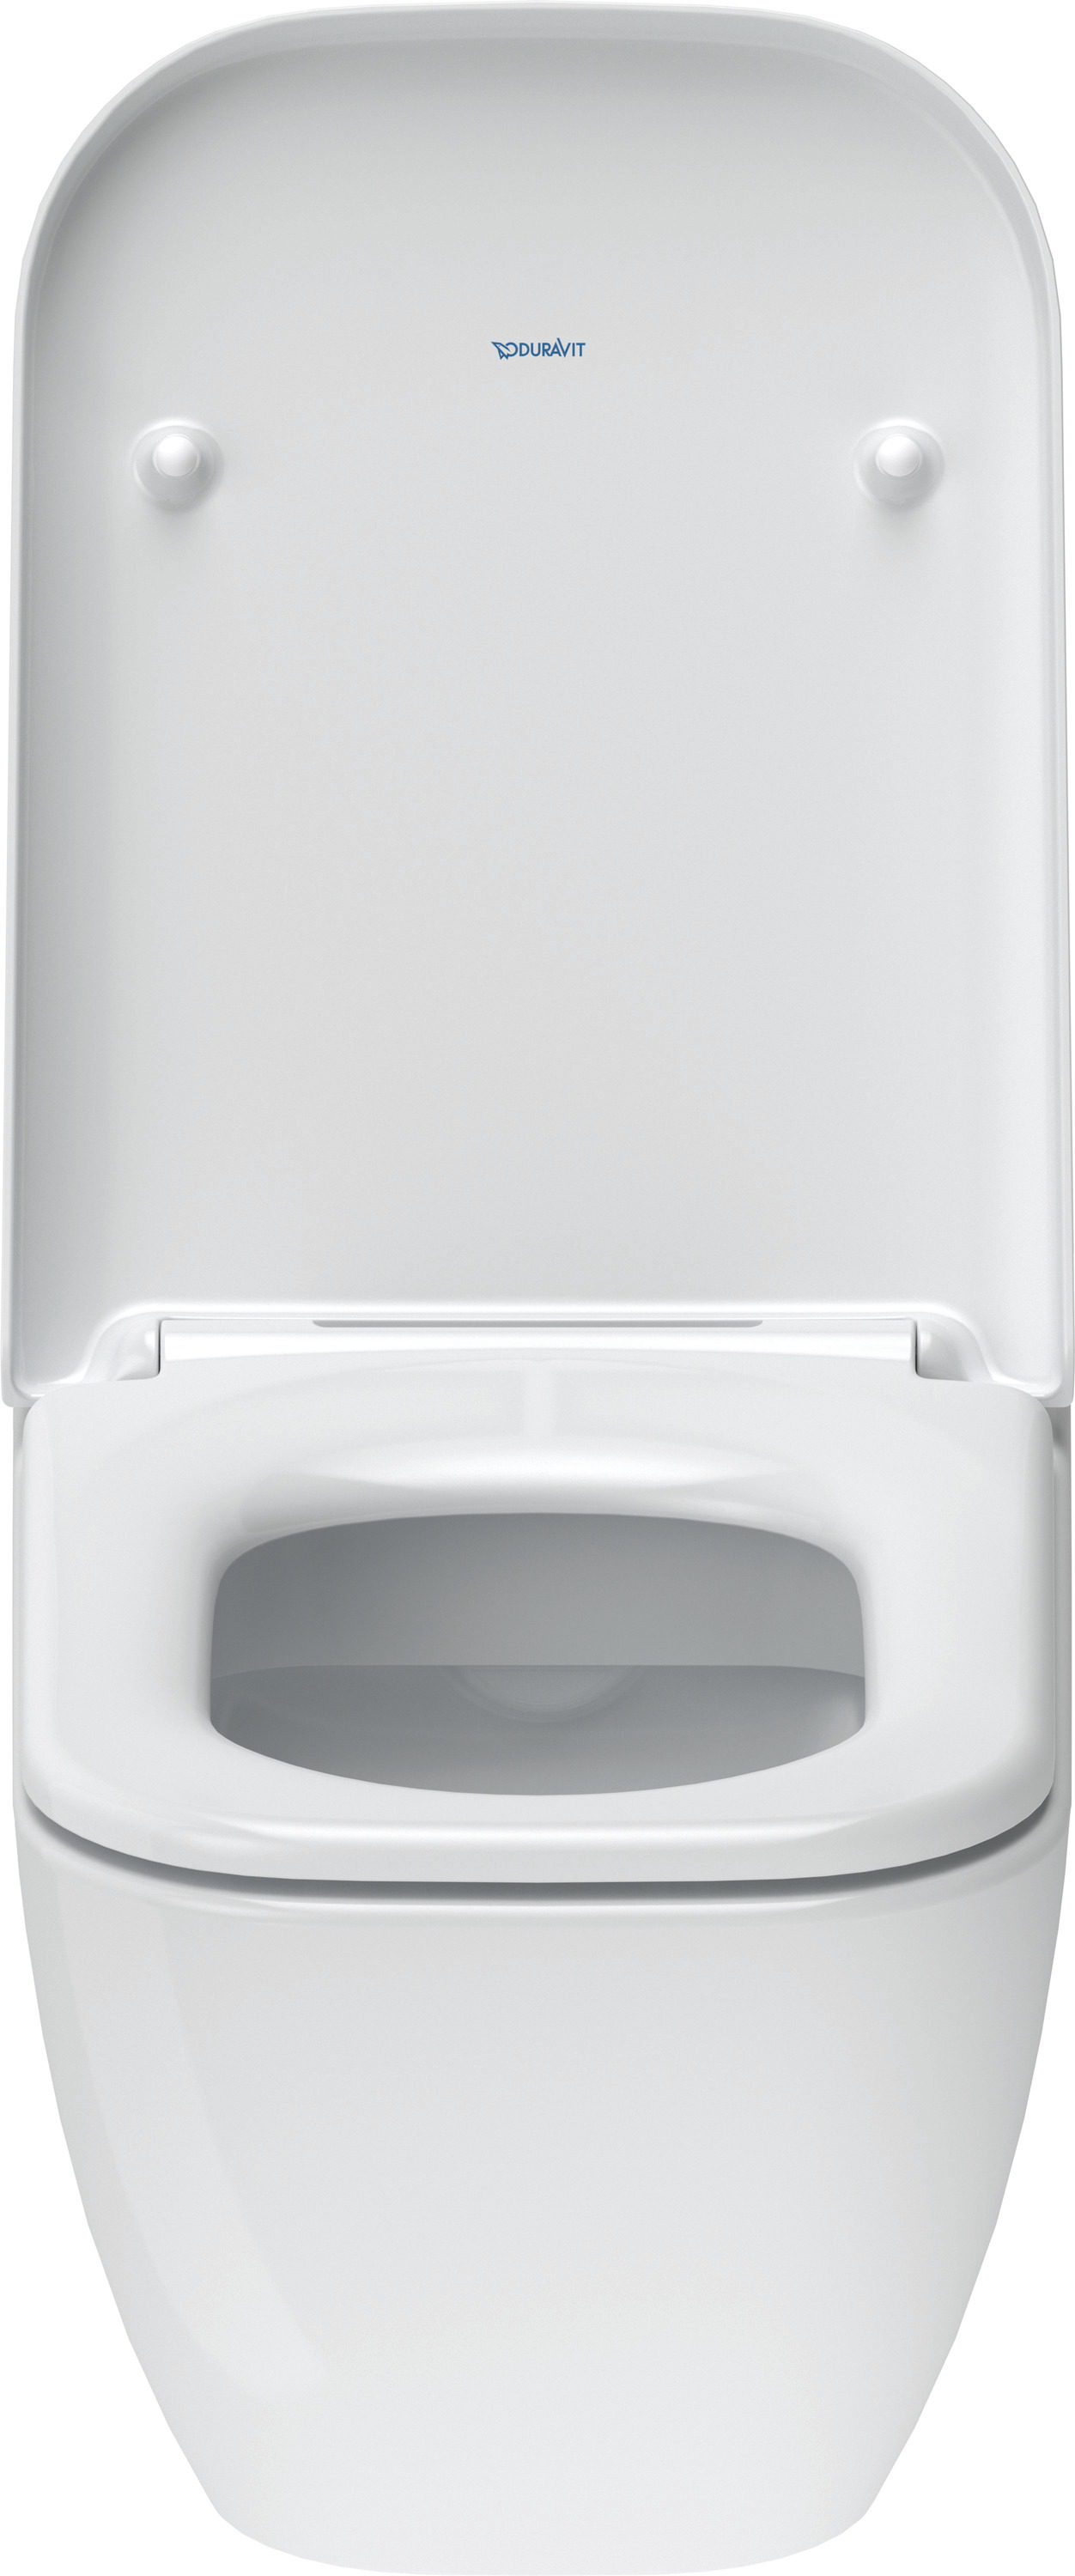 Wand-WC Happy D.2 620 mm Tiefspüler, rimless, Durafix, weiß